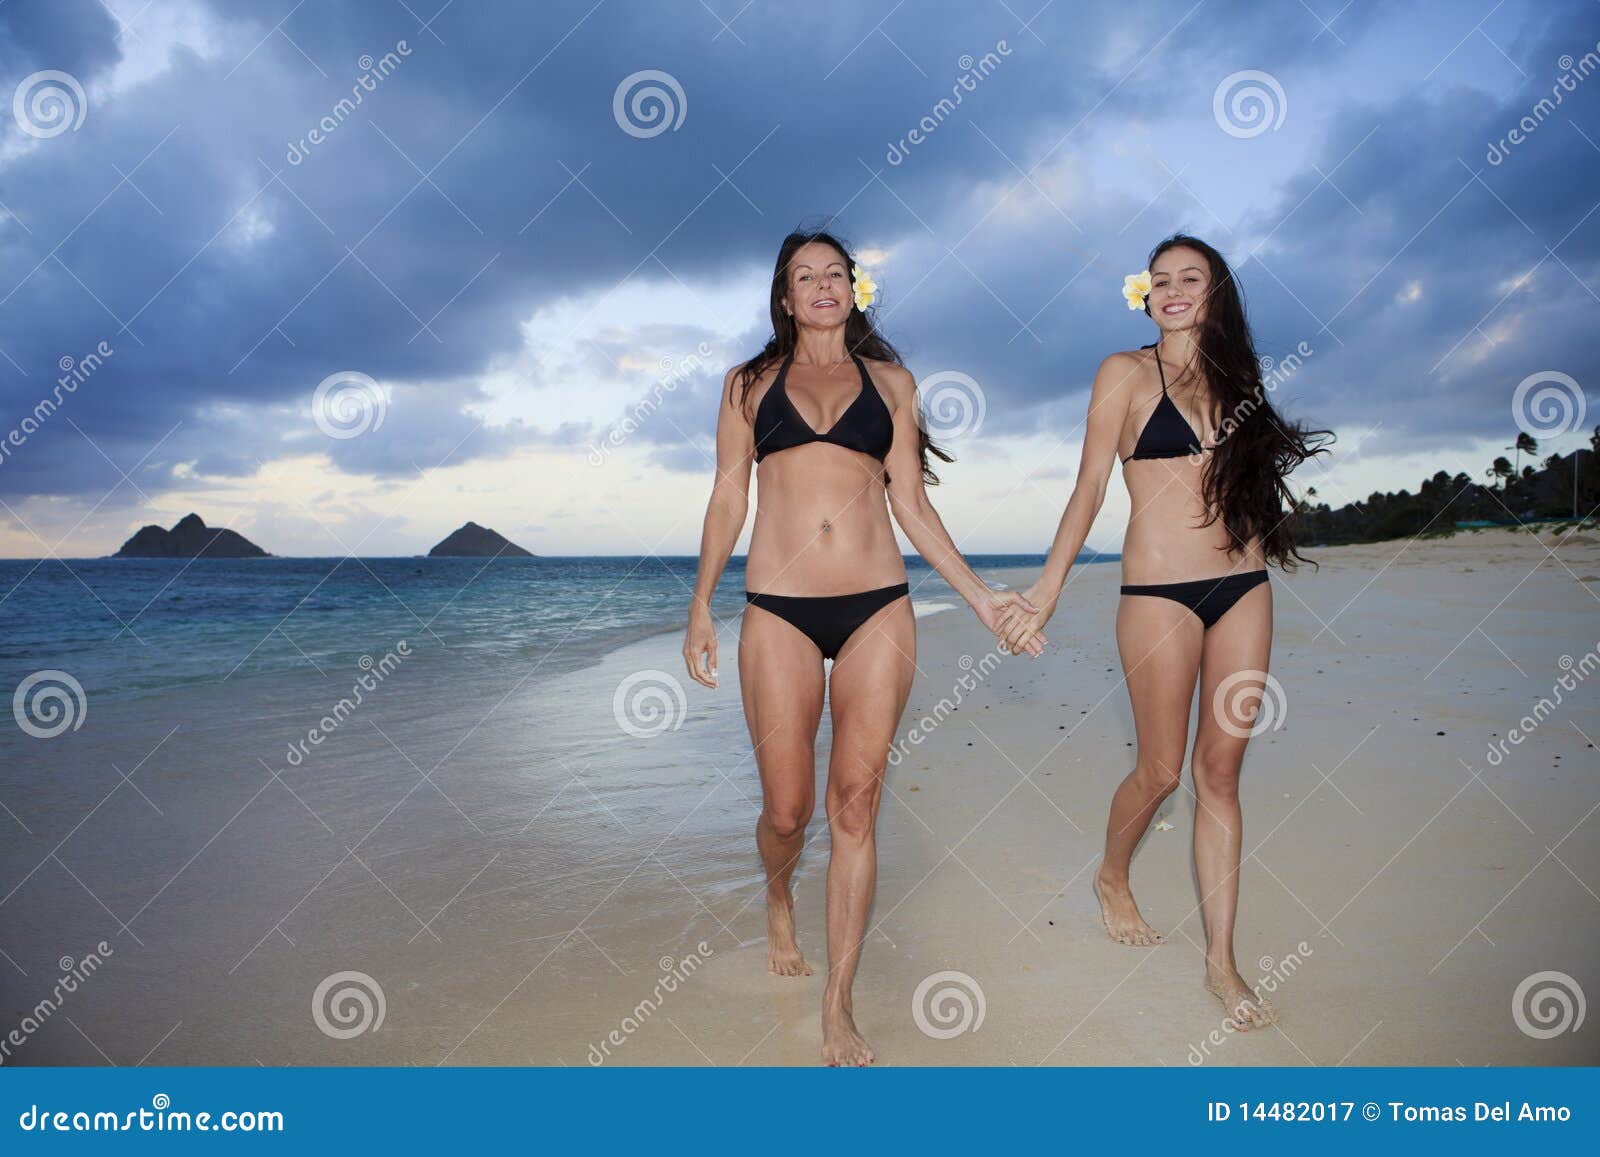 Latin girls nude on the beach - Hot Nude